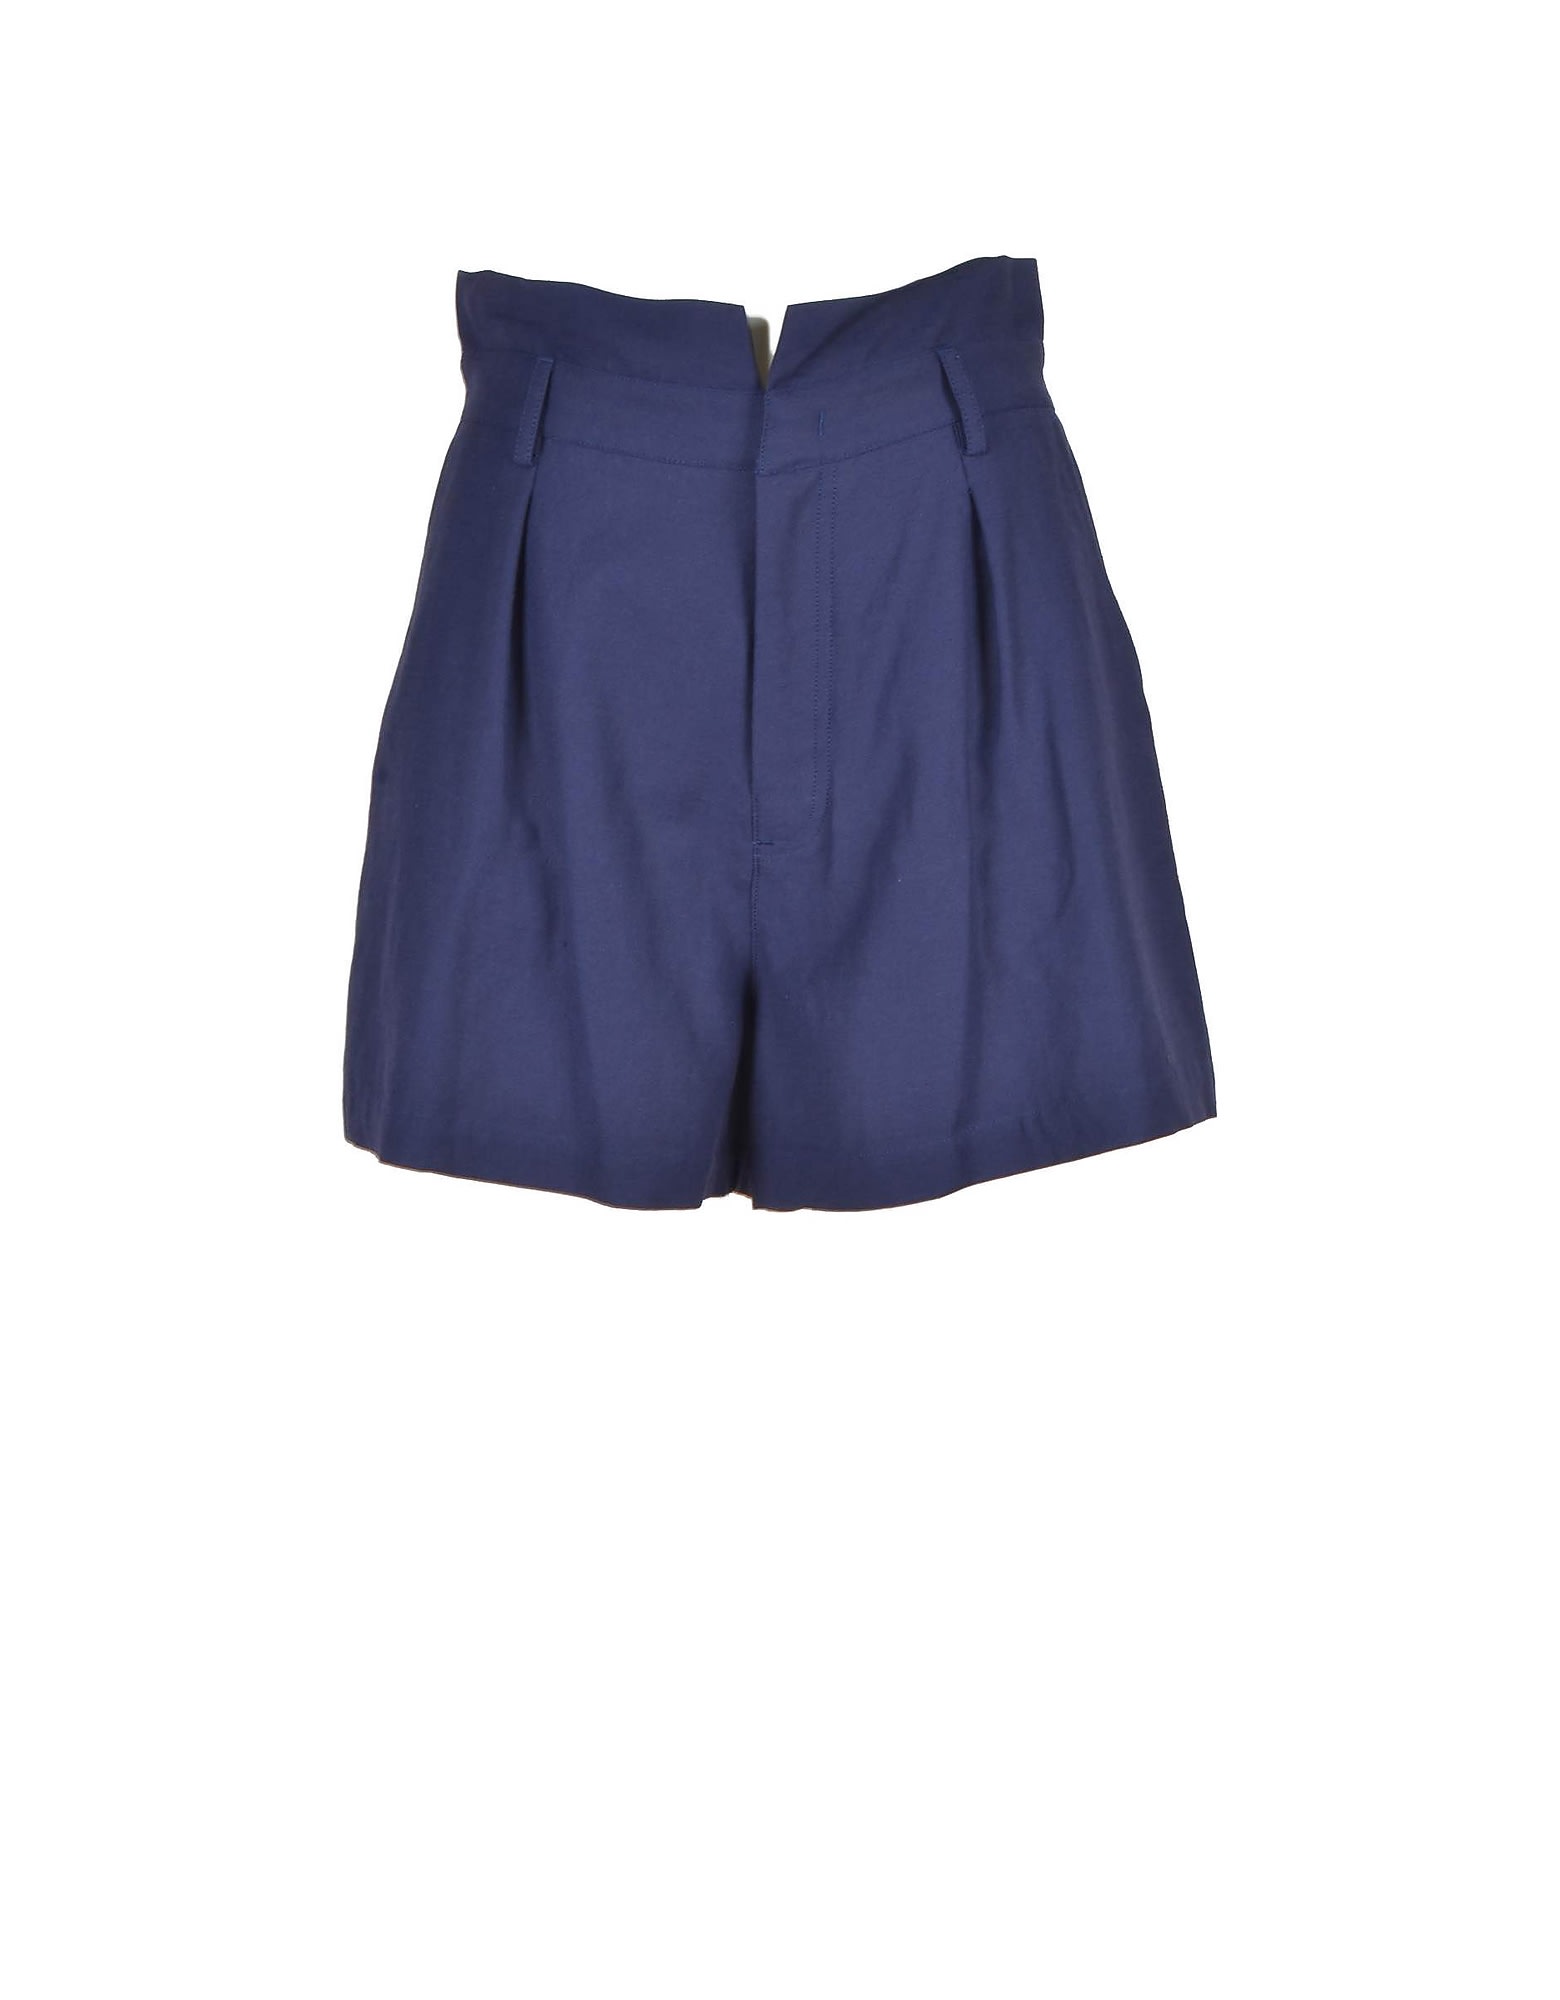 Attic and Barn Womens Blue Shorts